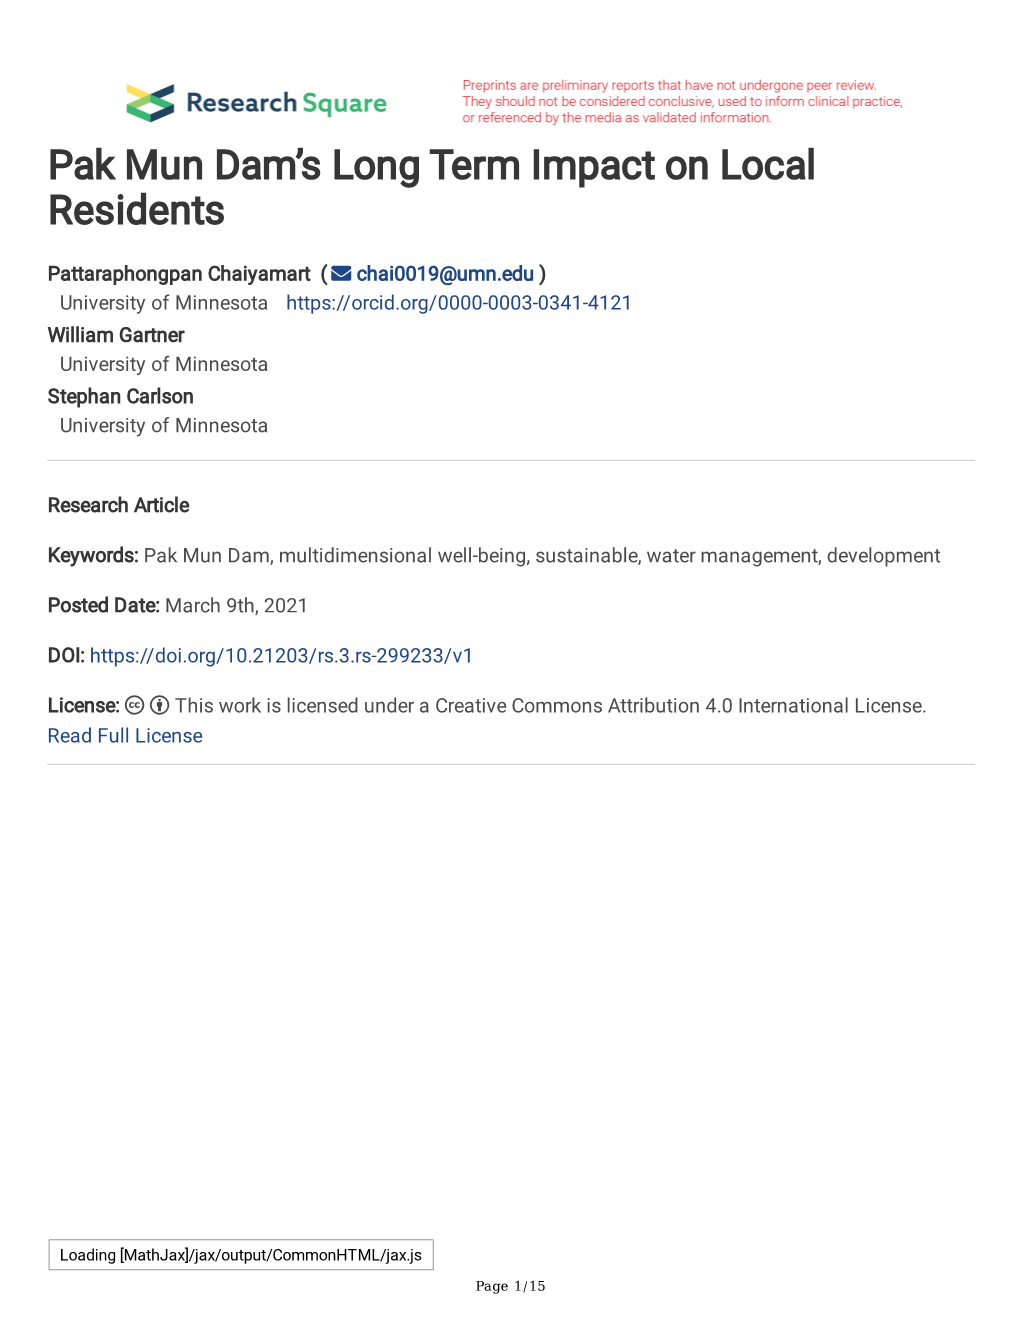 Pak Mun Dam's Long Term Impact on Local Residents